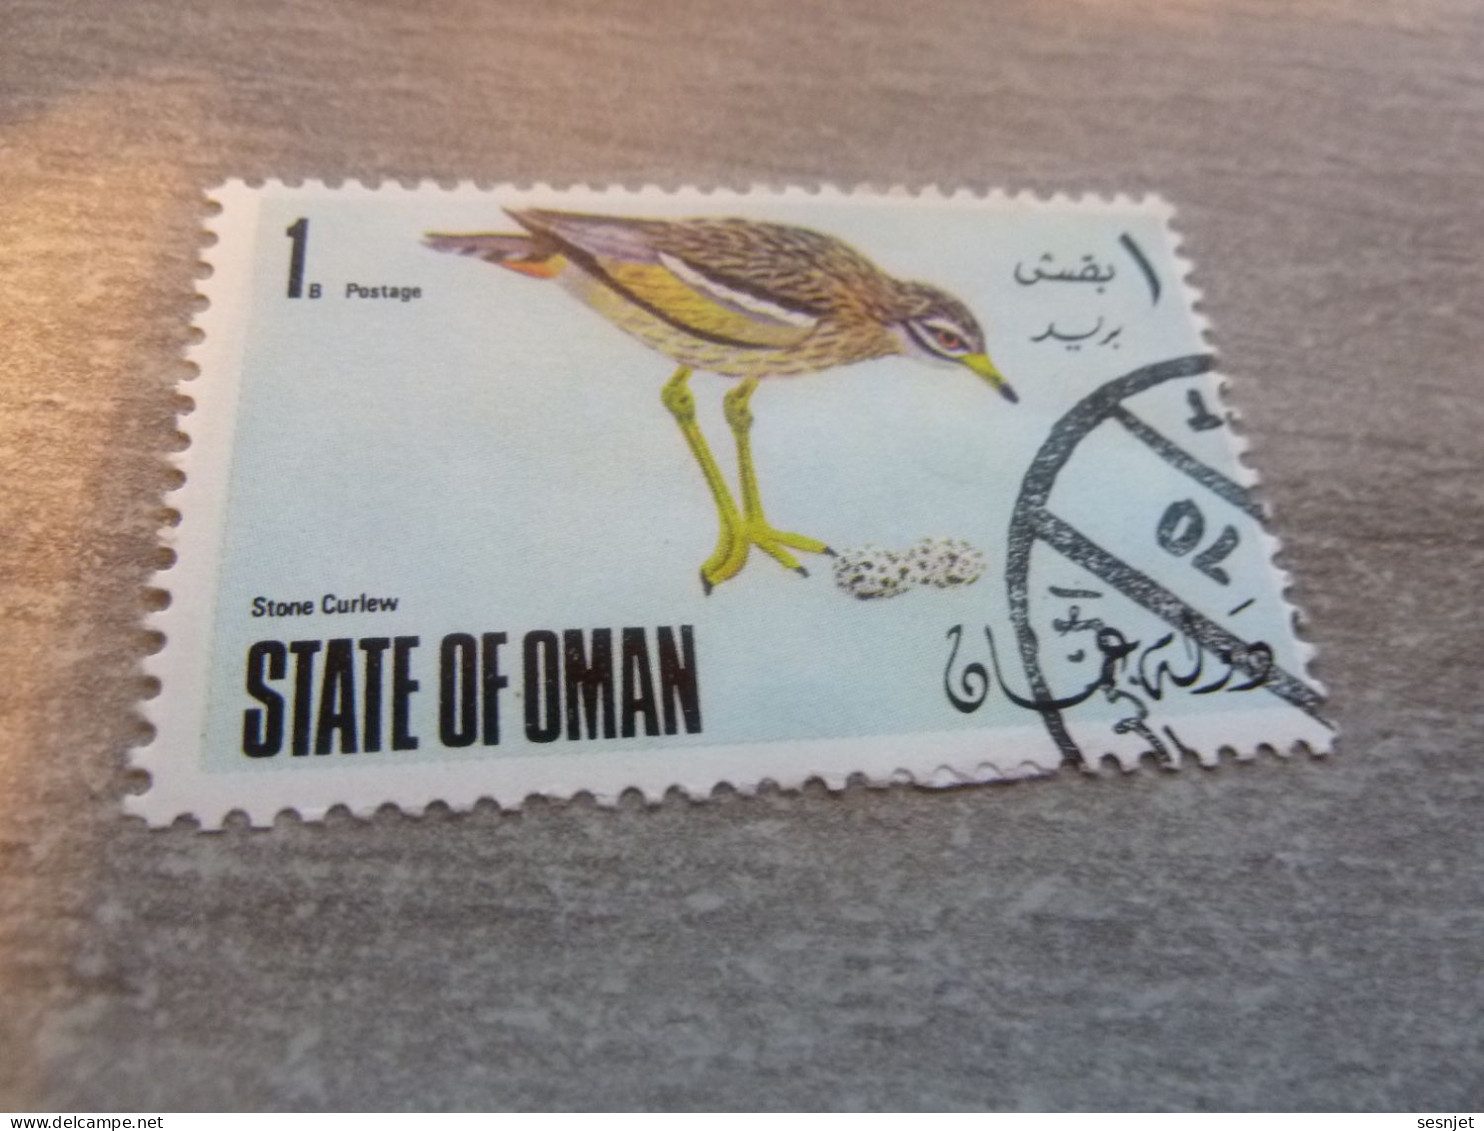 State Of Oman - Stone Curlew -  Val 1 B - Postage - Polychrome - Oblitéré - Année 1970 - - Spatzen